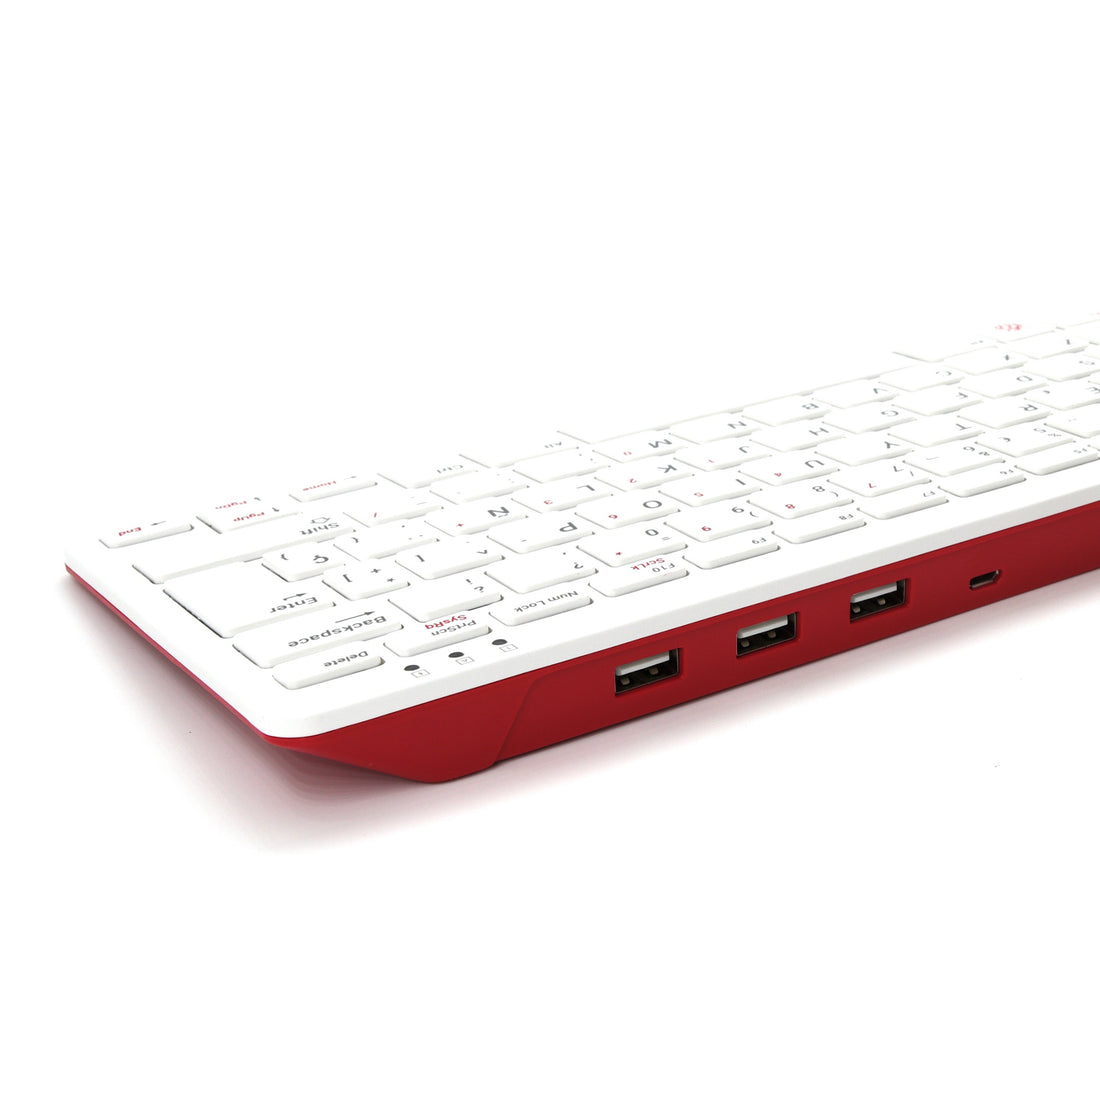 [OPEN BOX] Raspberry Pi Keyboard-Spanish-Red/White